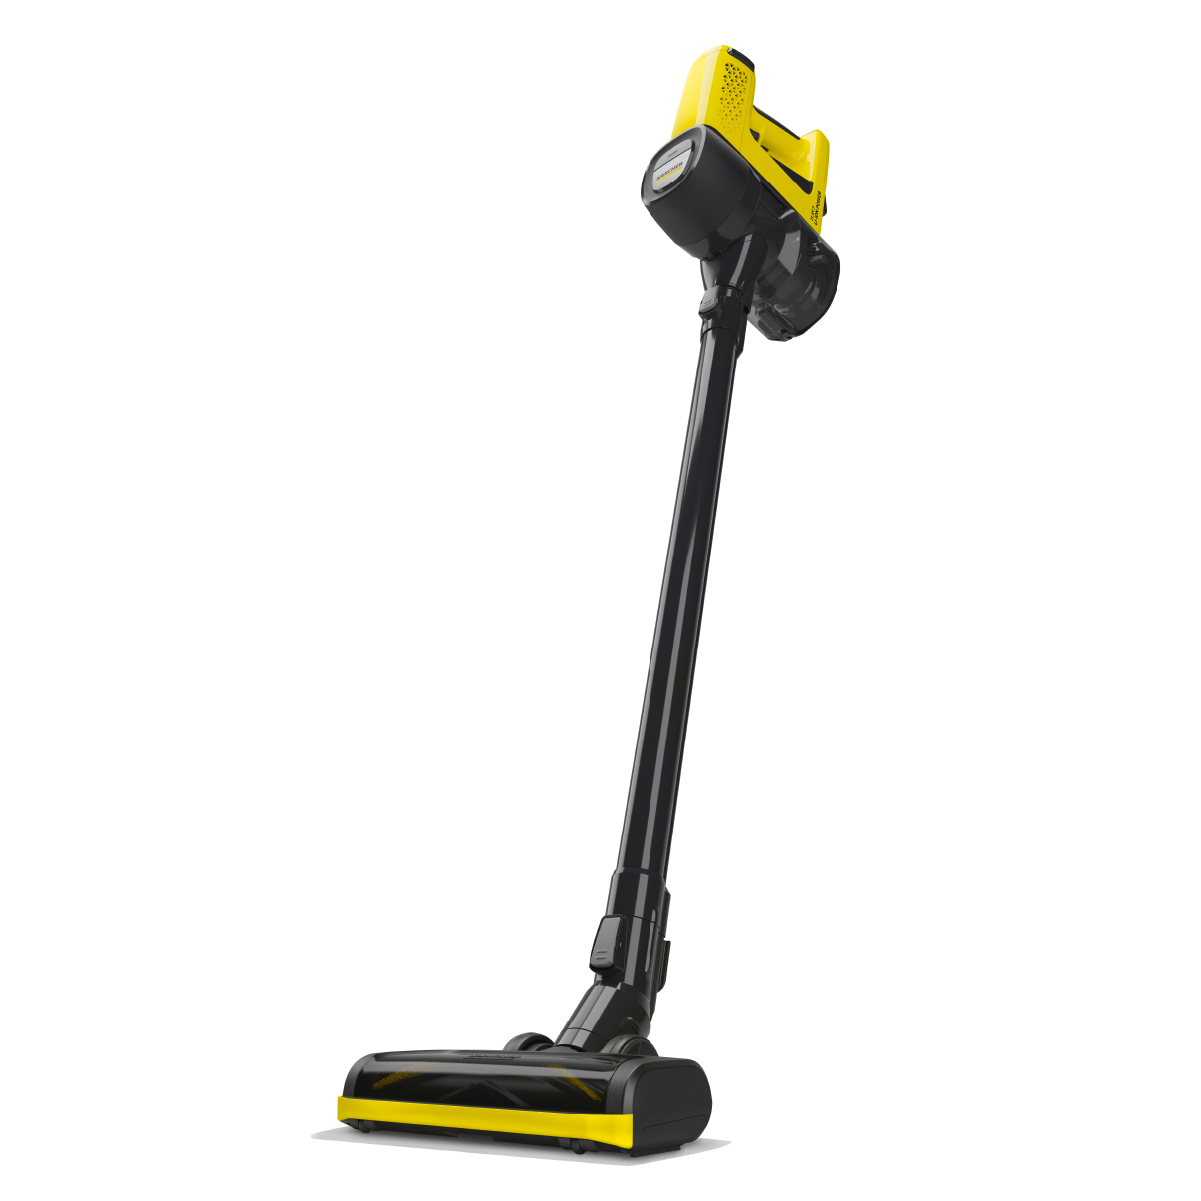 Cordless Stick Vacuum Cleaner - VC 4